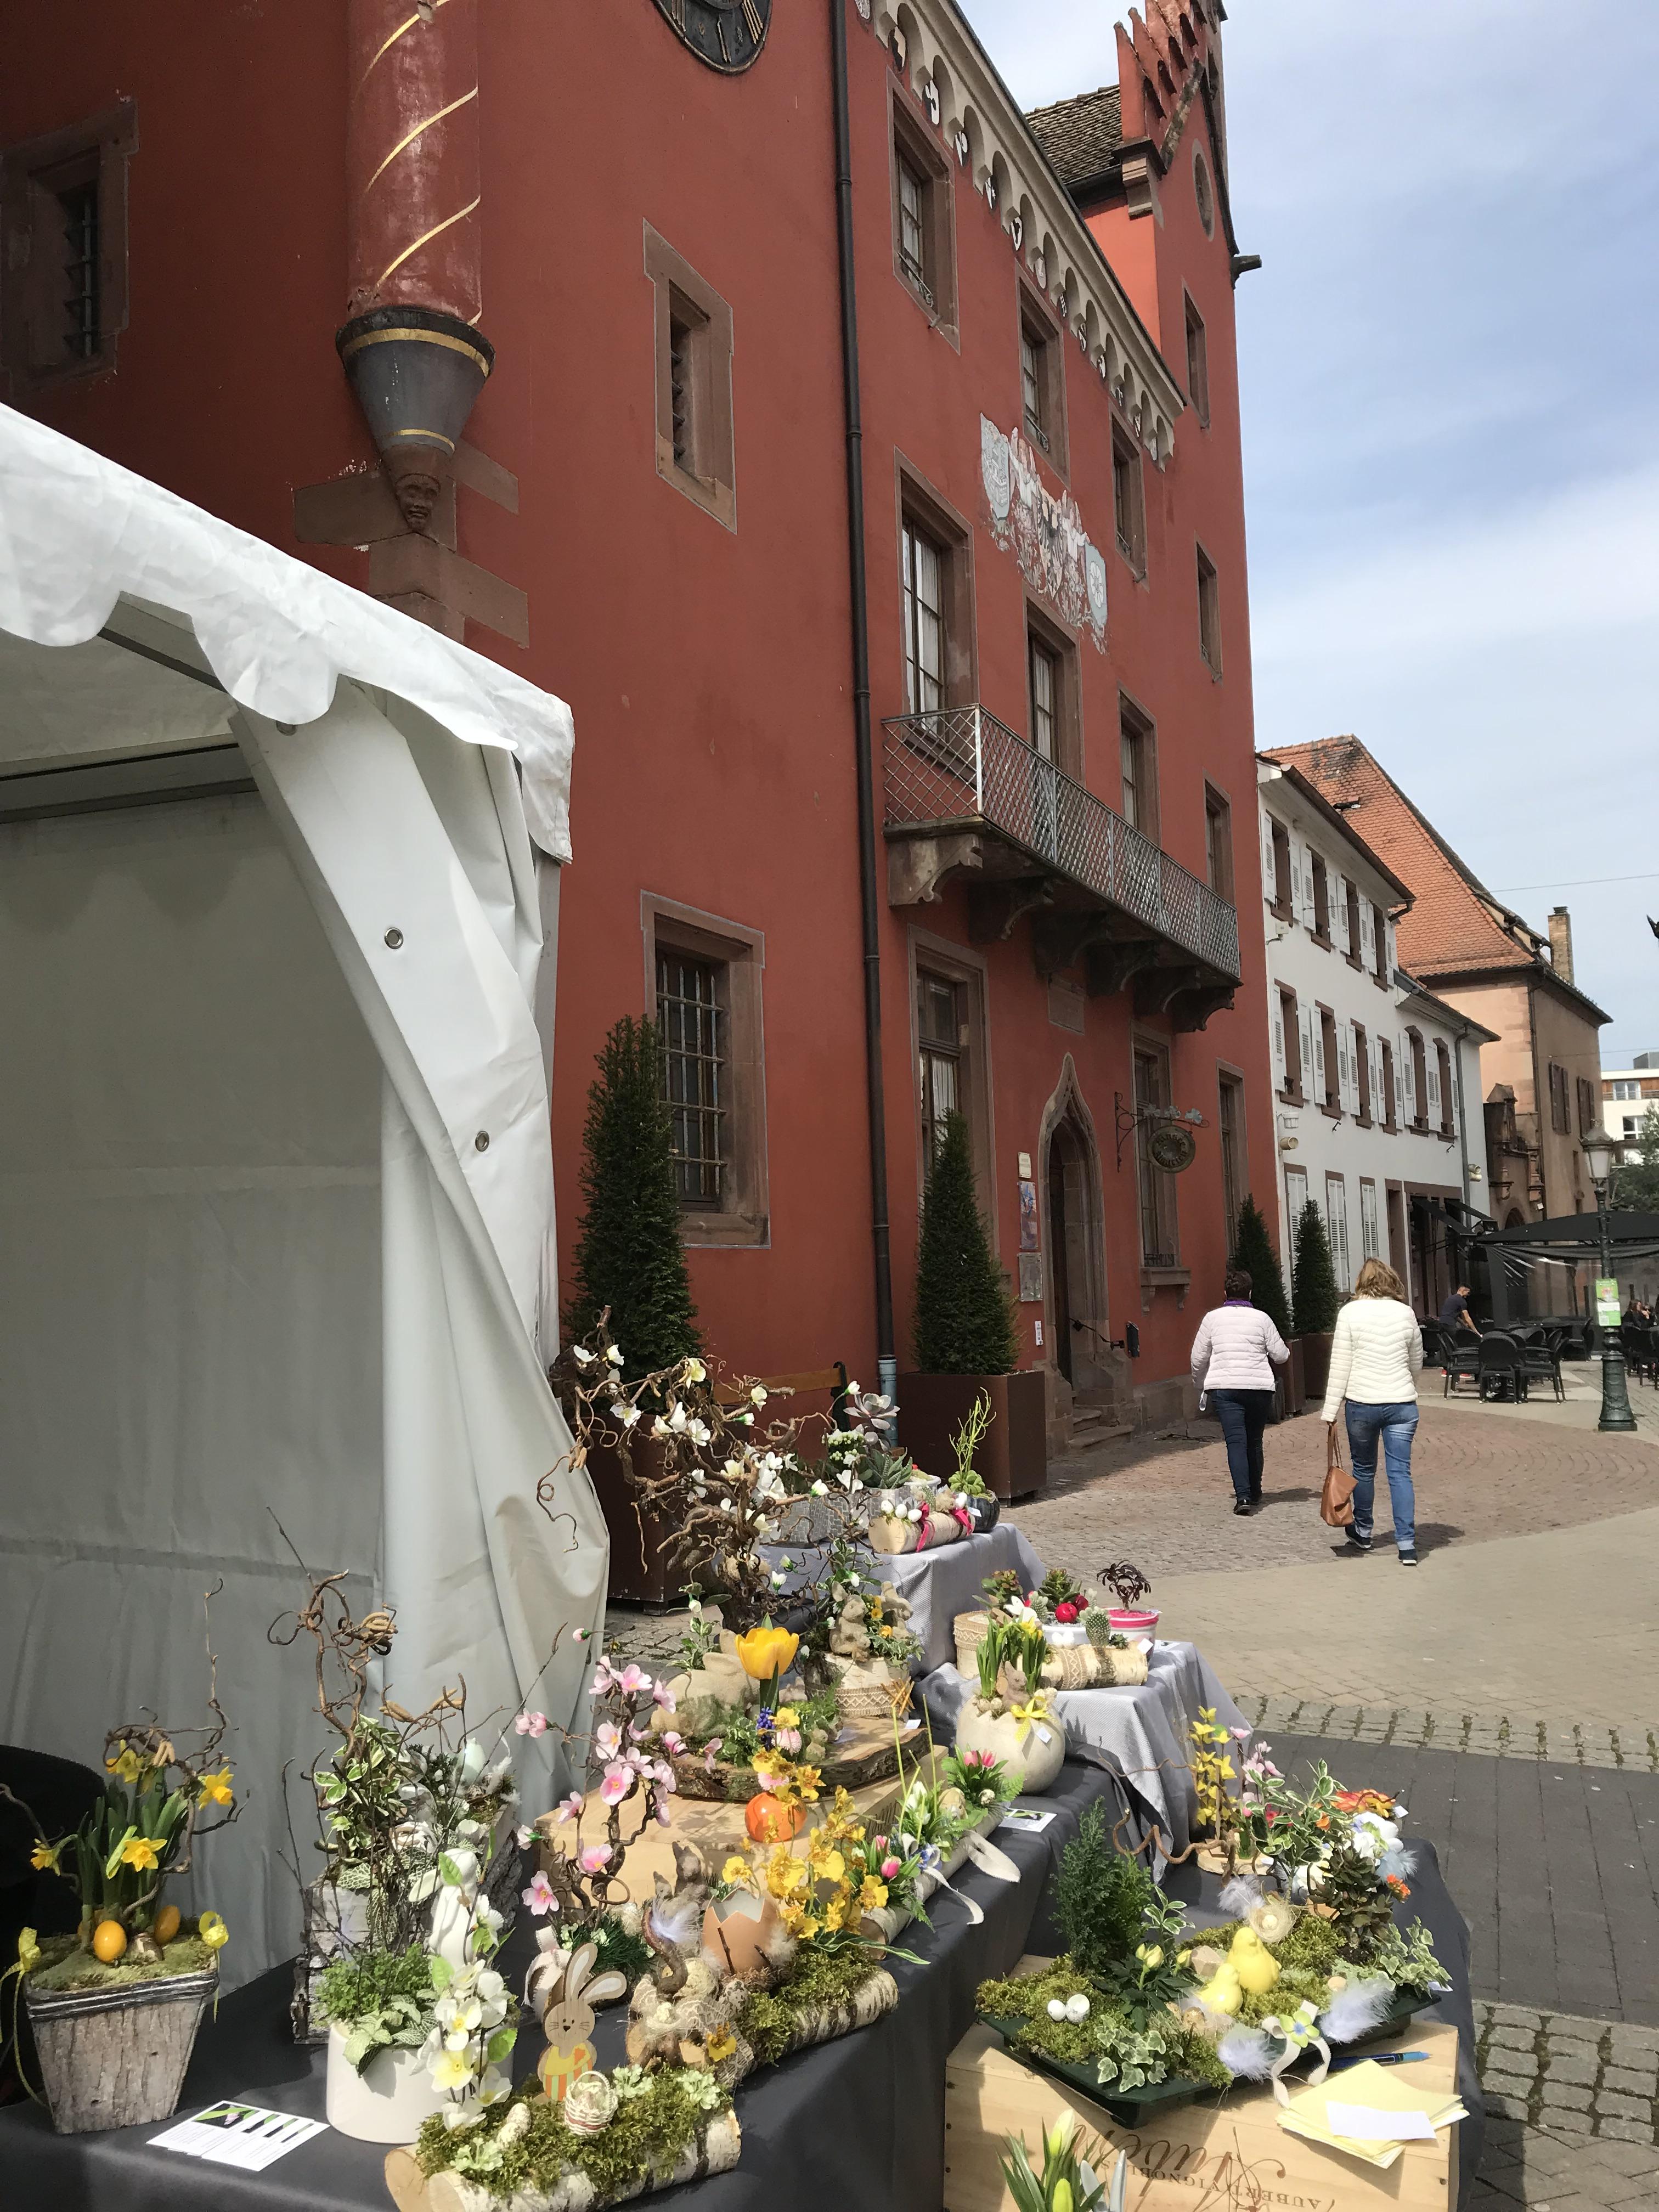 Spring market in Haguenau